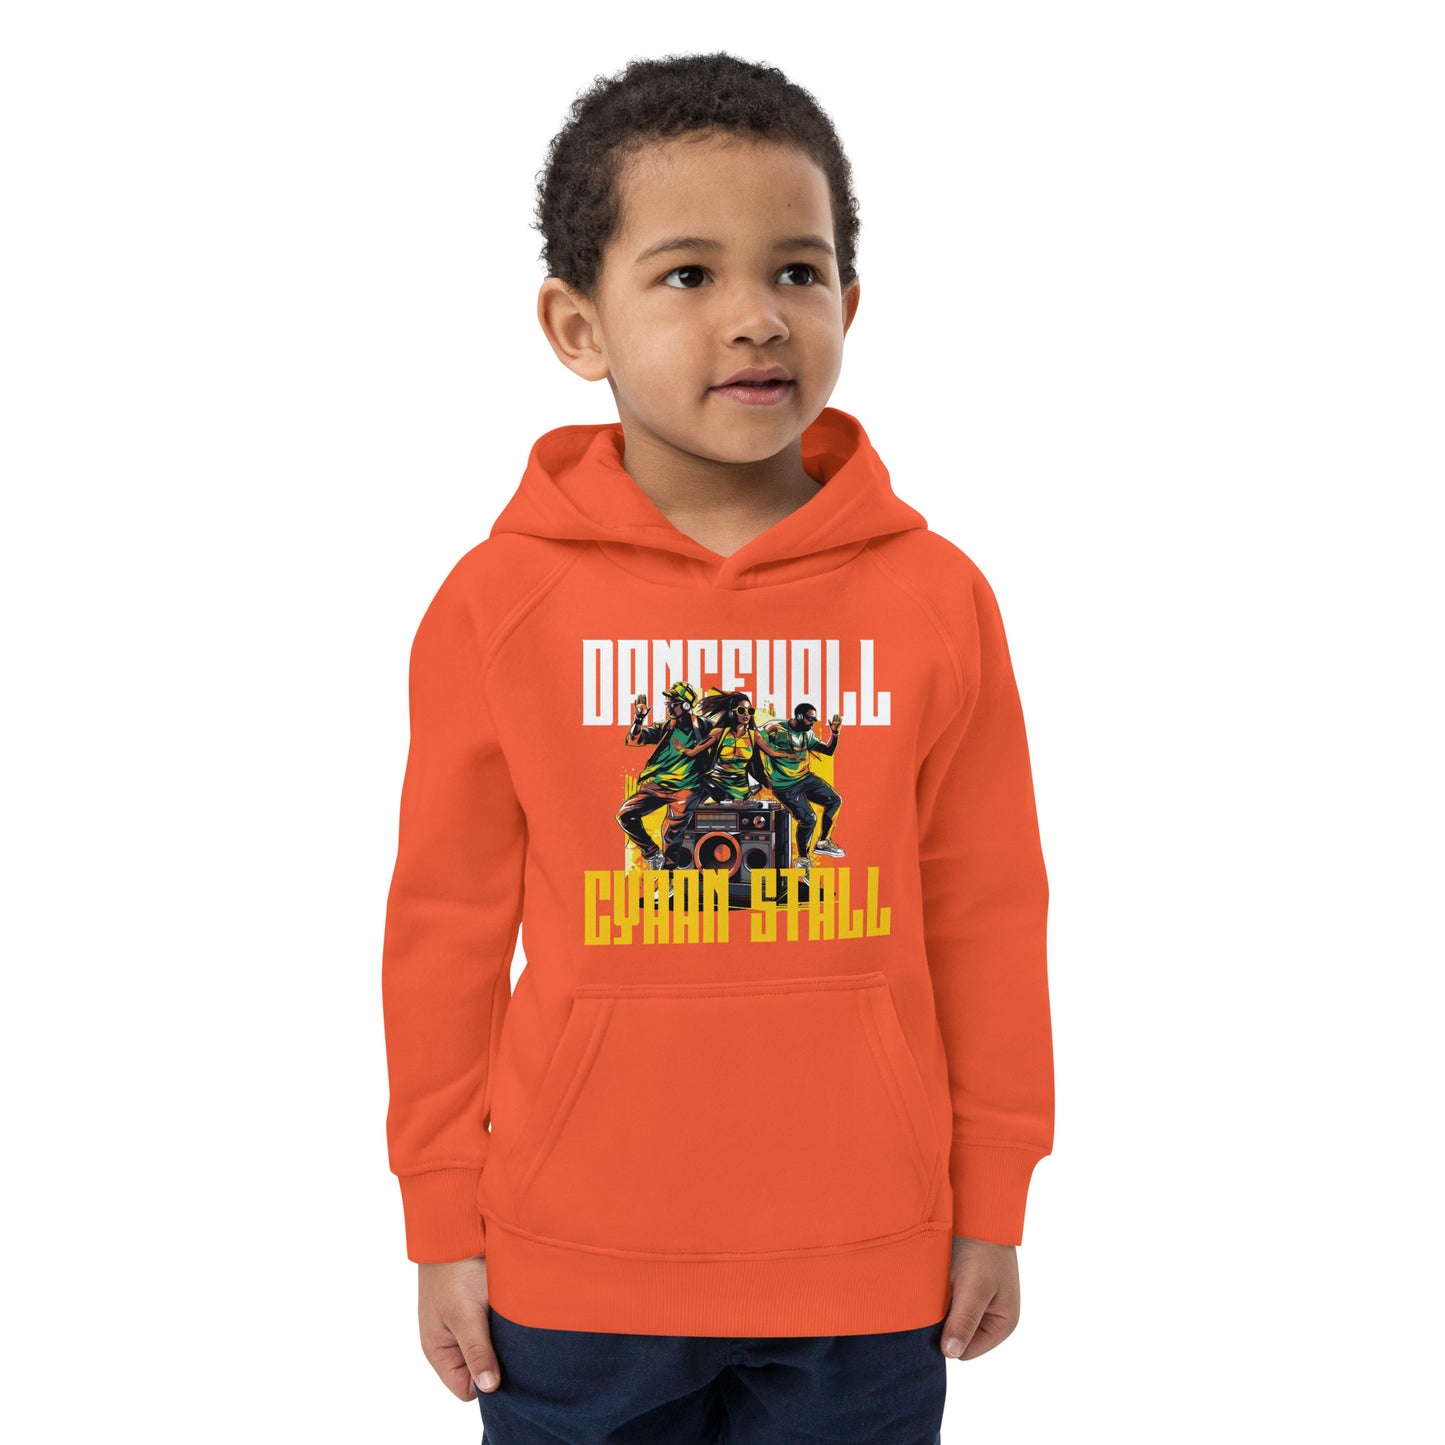 Kids eco "Dancehall Cyaan Stall" hoodie